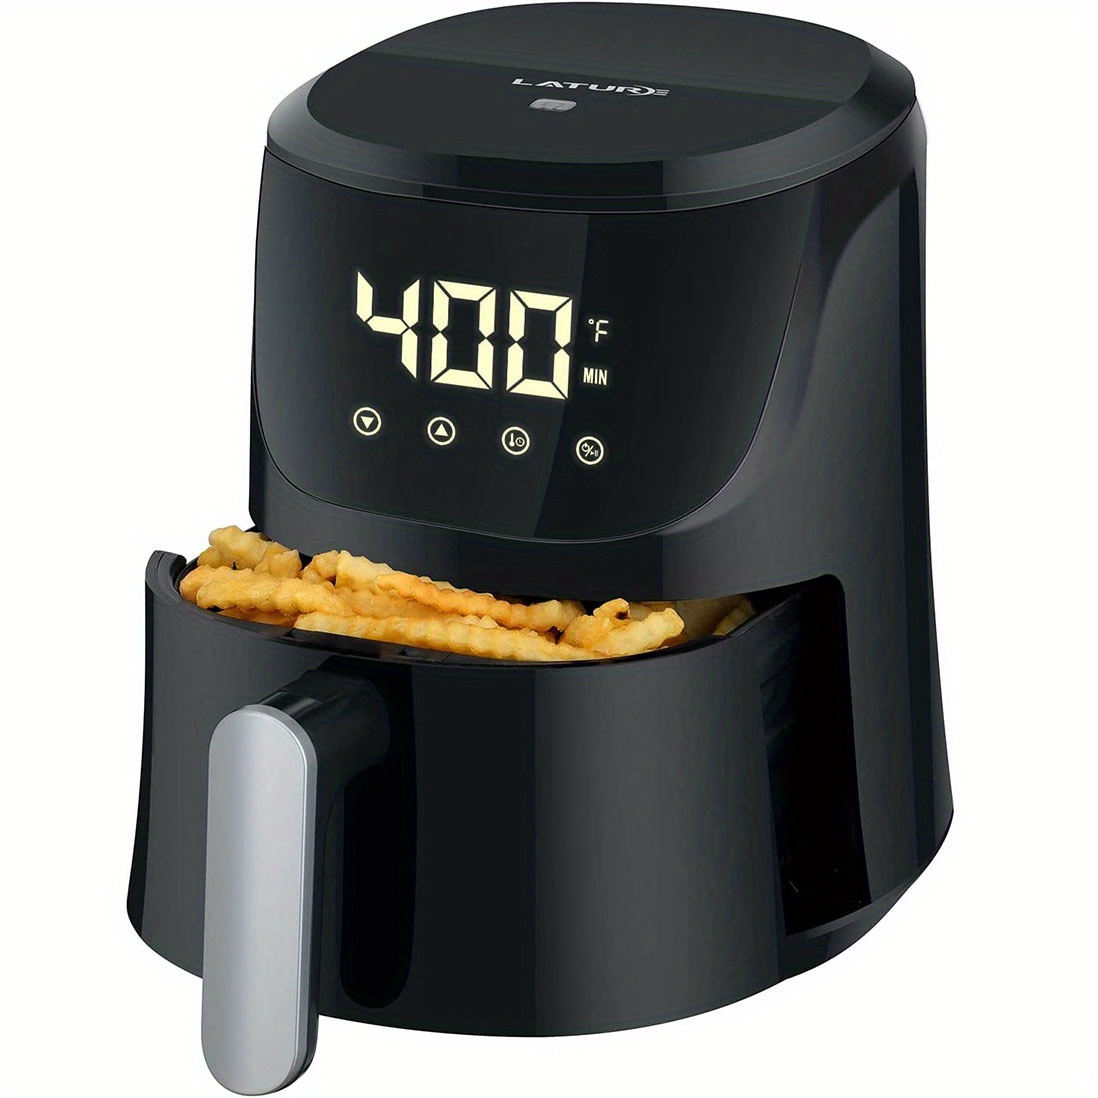 KitCook Air Fryer, 6.8 QT Air Fryer Oven with 8 Preset Menu